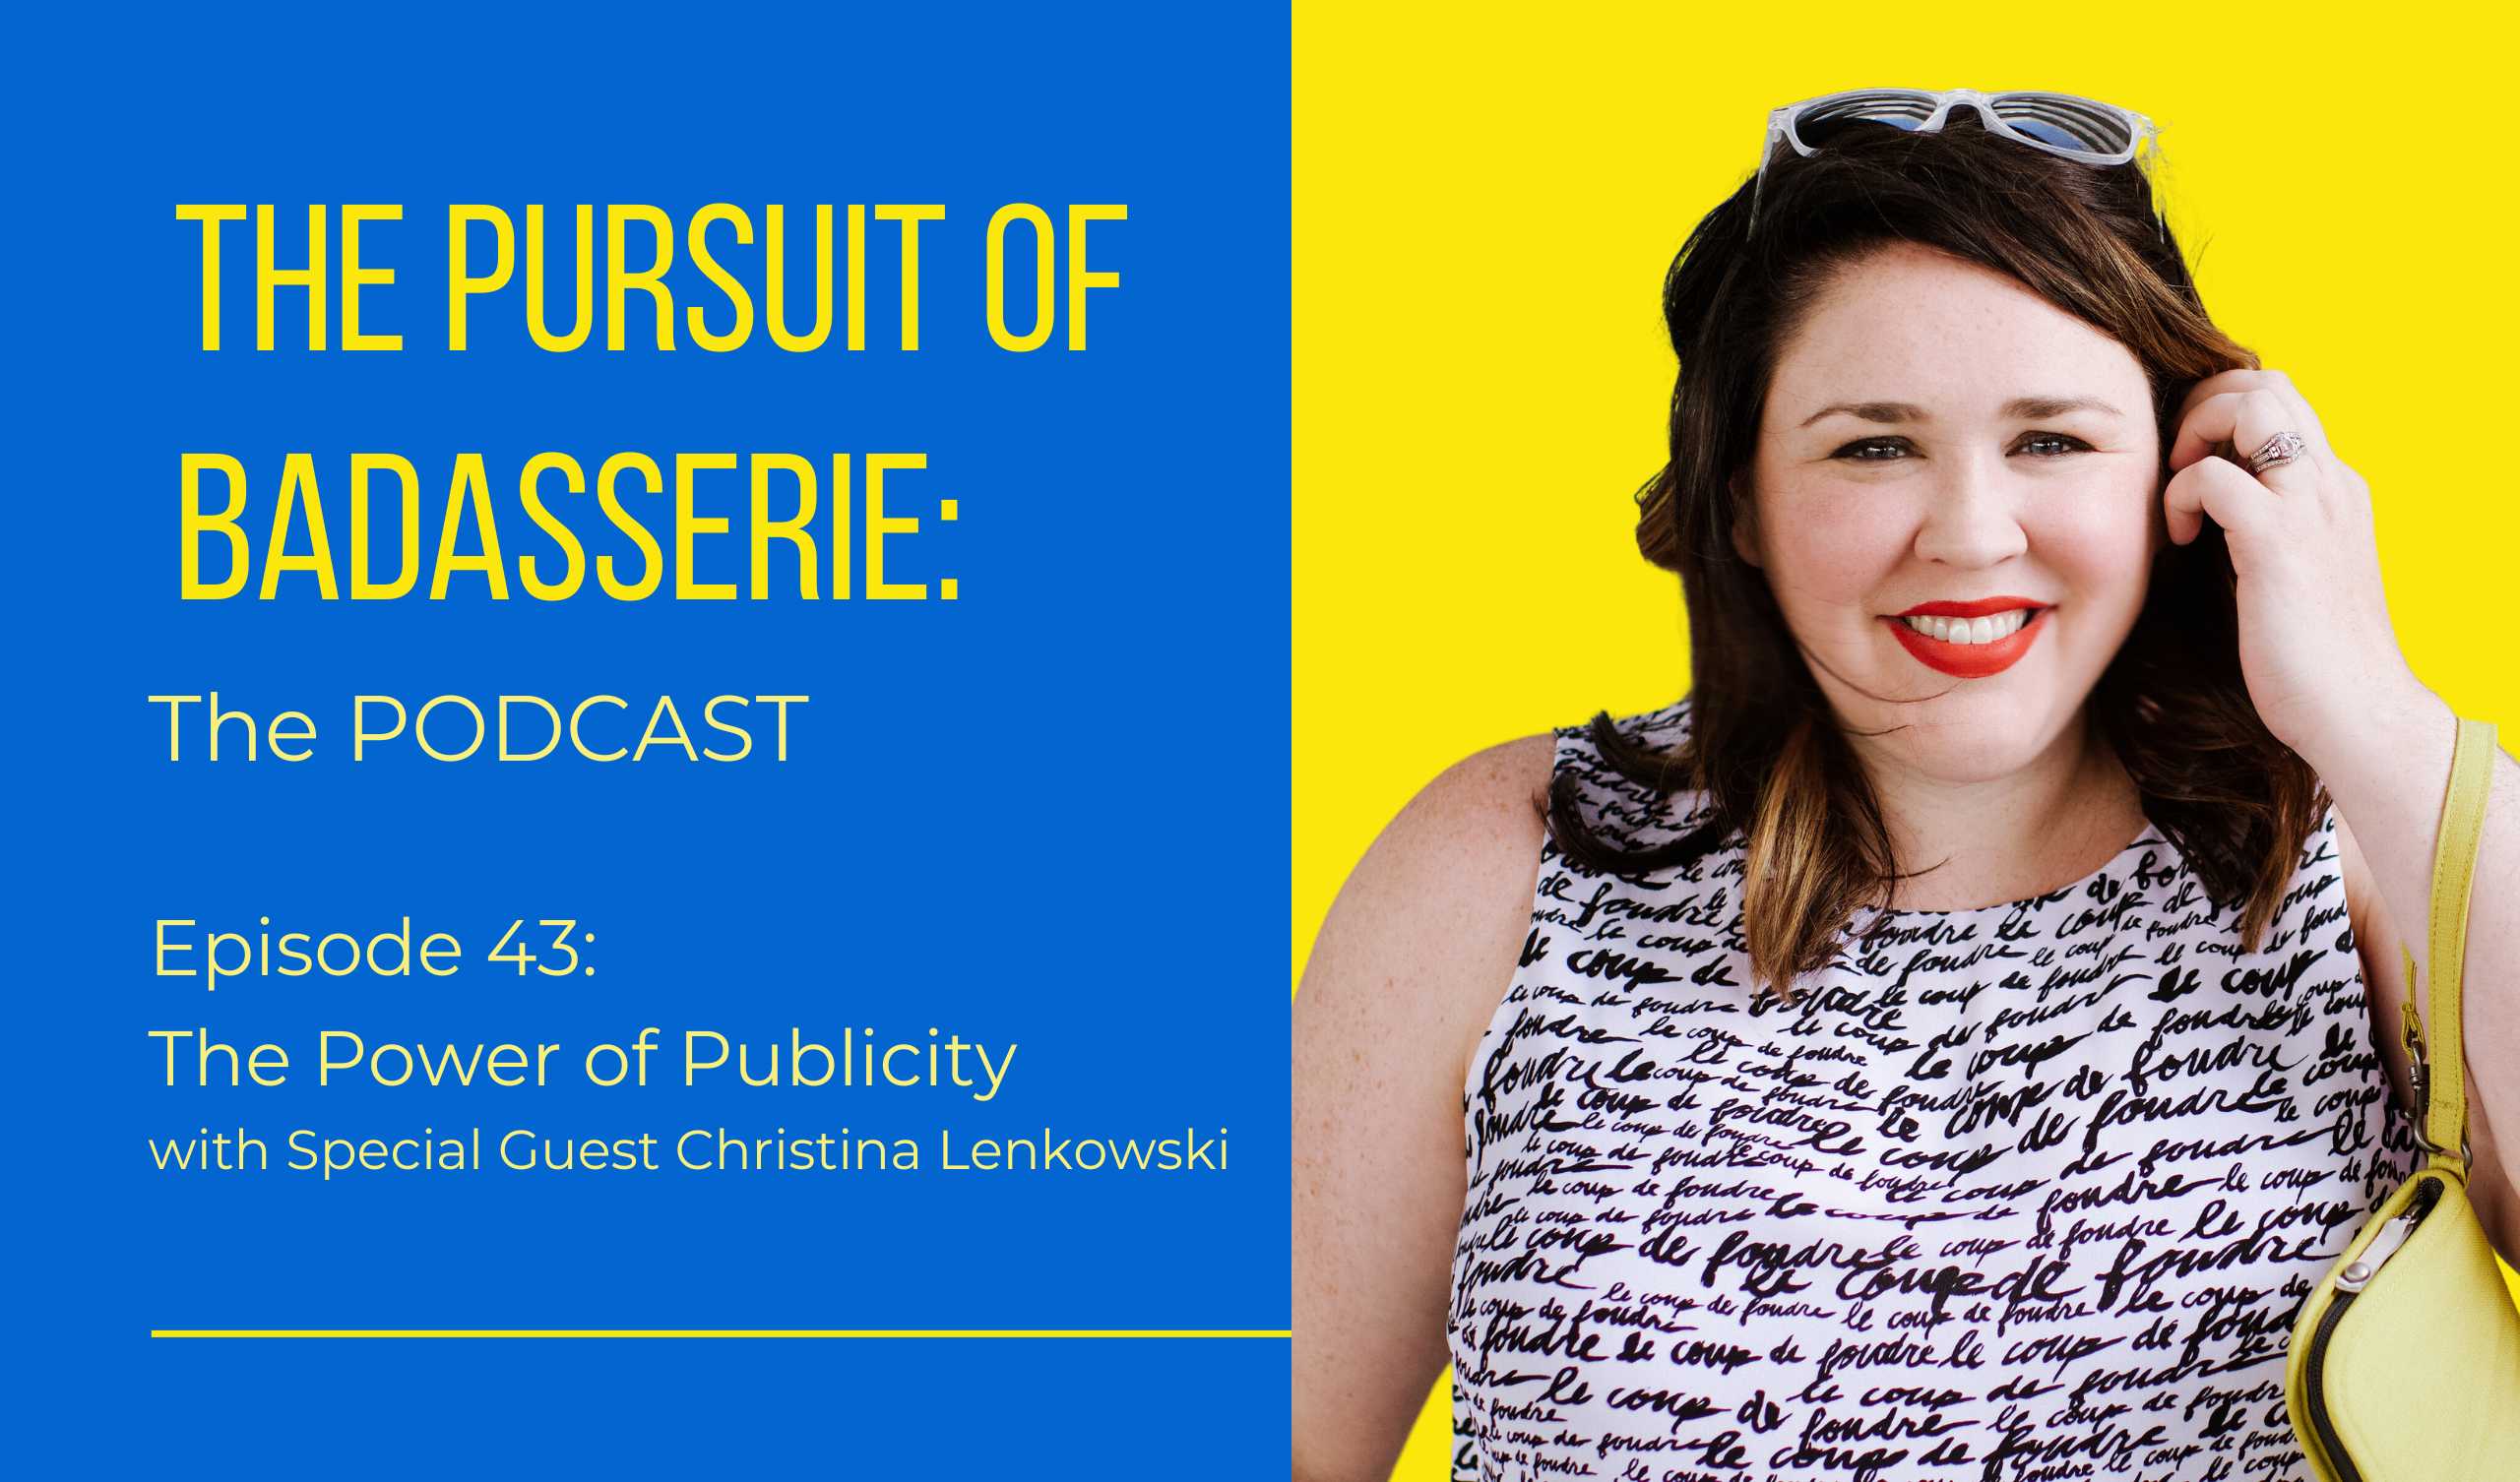 Podcast interview with Christina Lenkowski